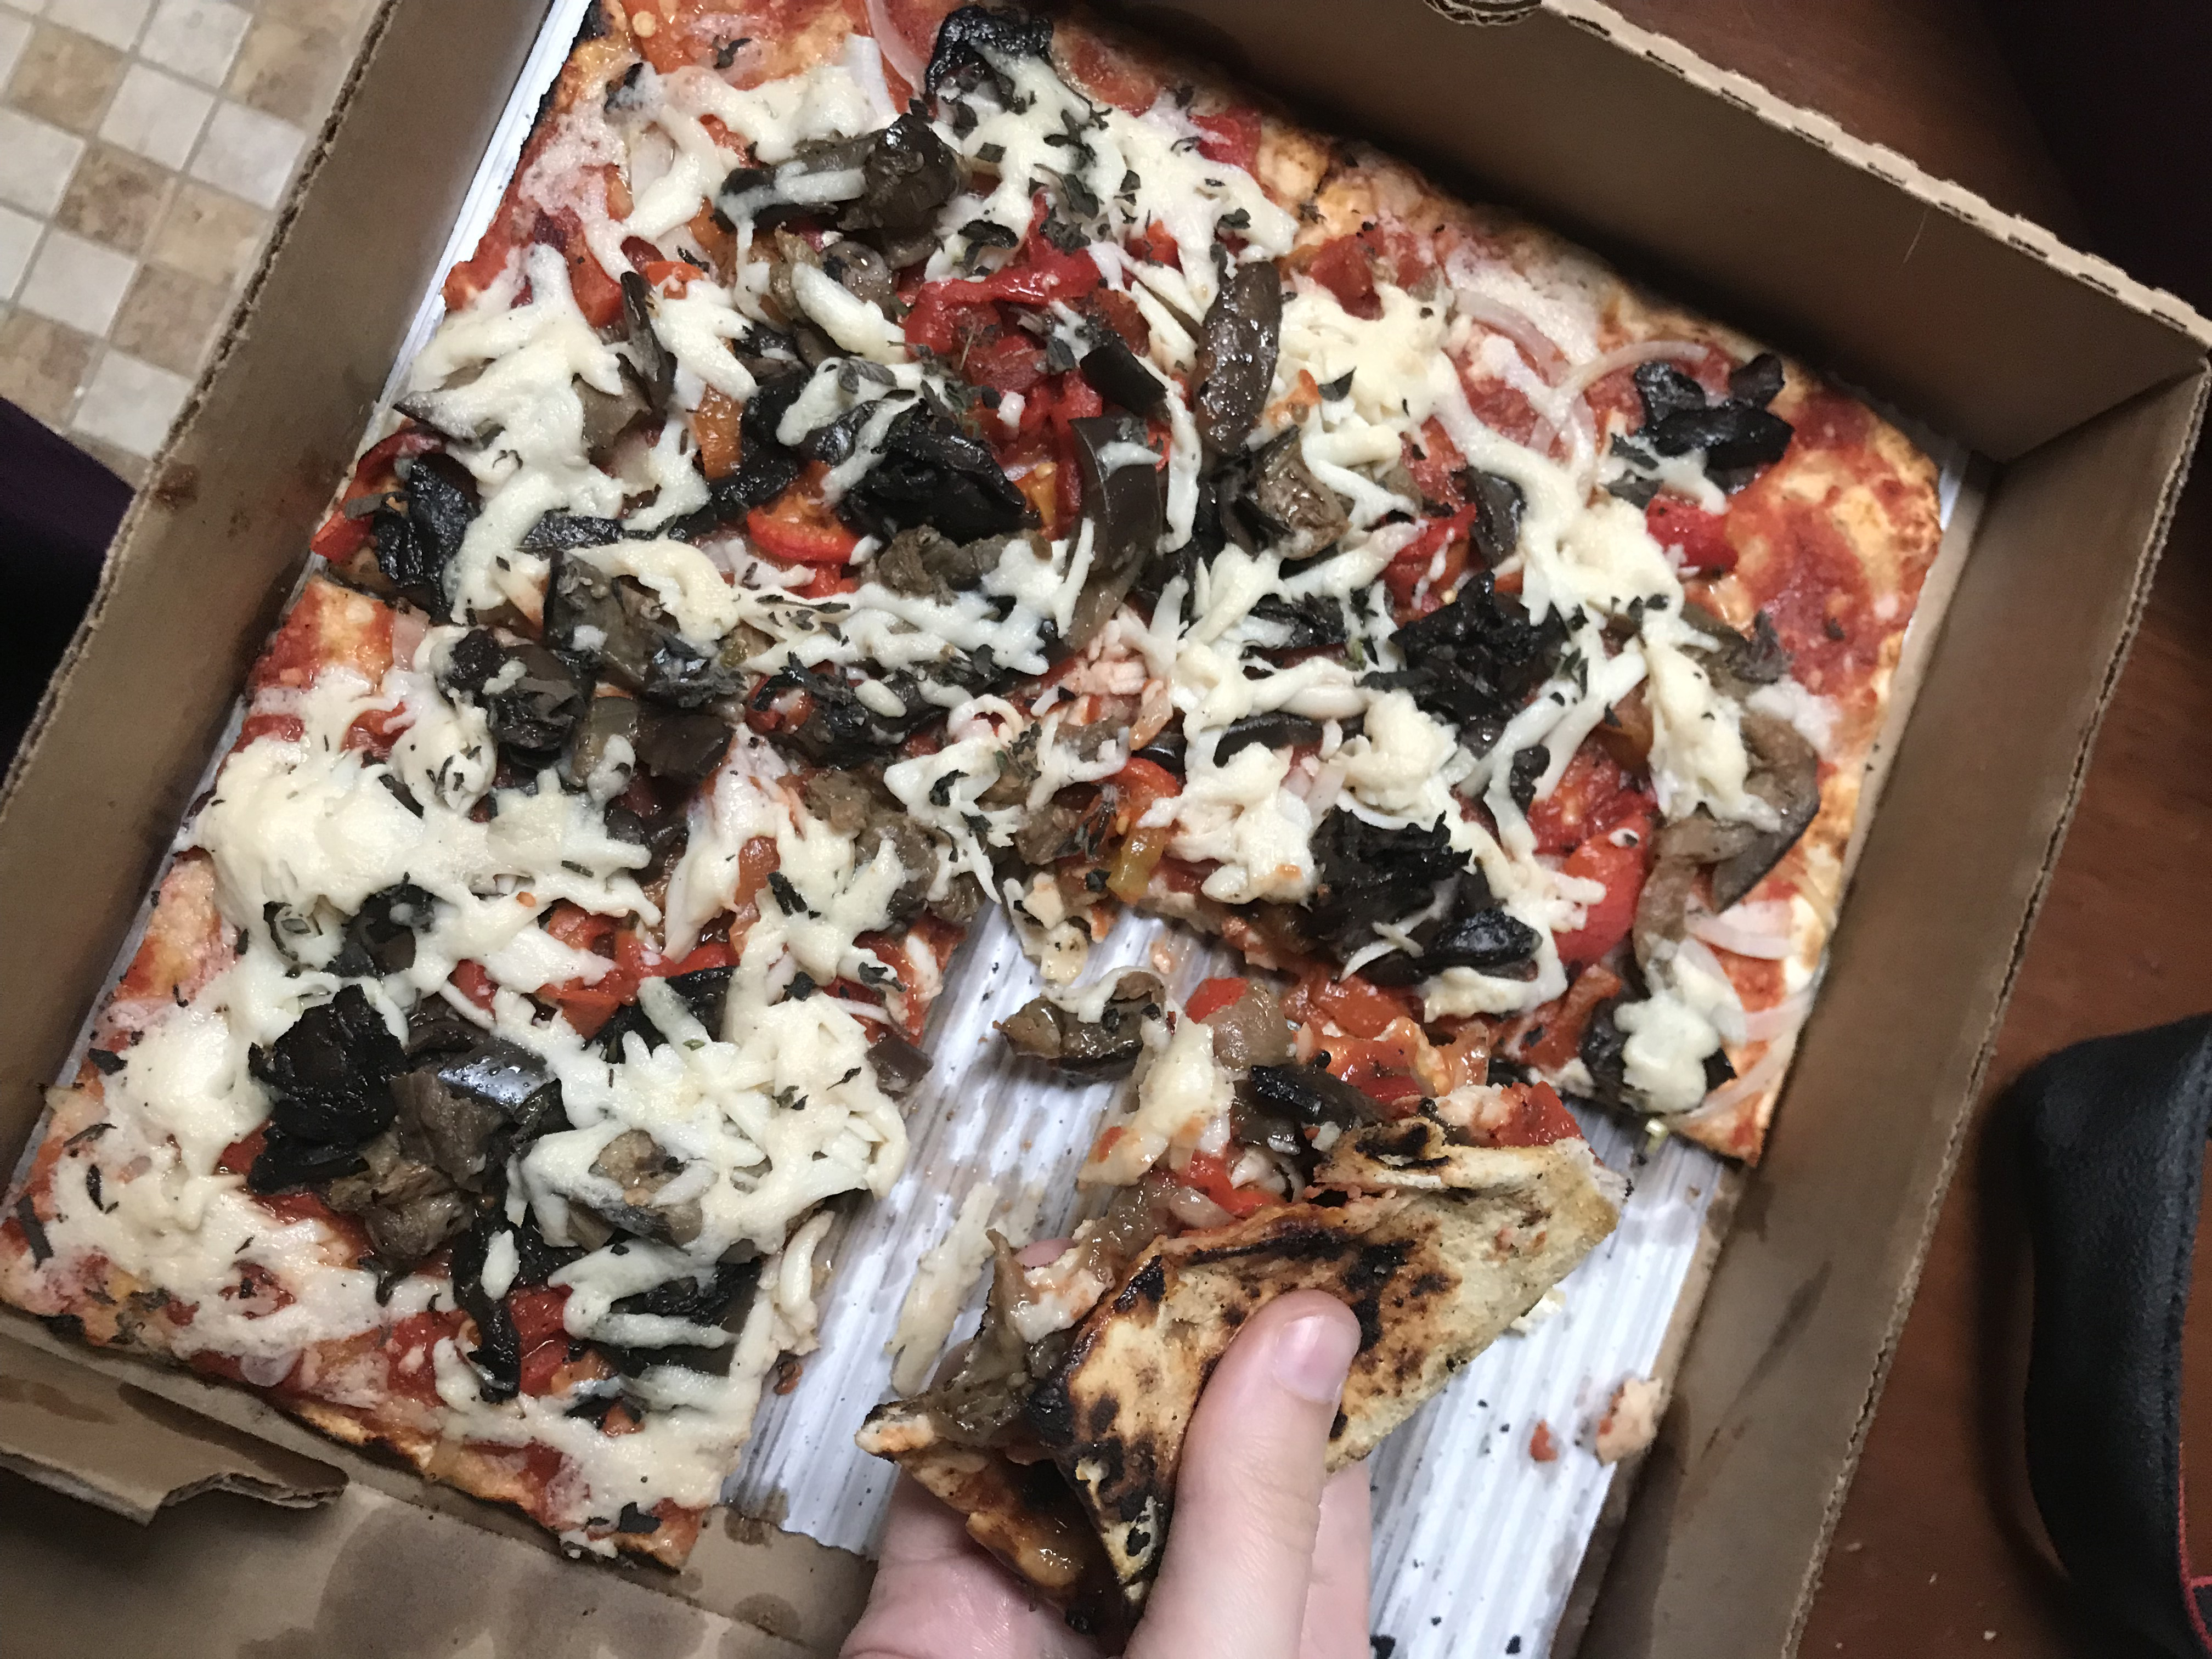 Vegan pizza by Joe Squared - Vegan Restaurants in Baltimore